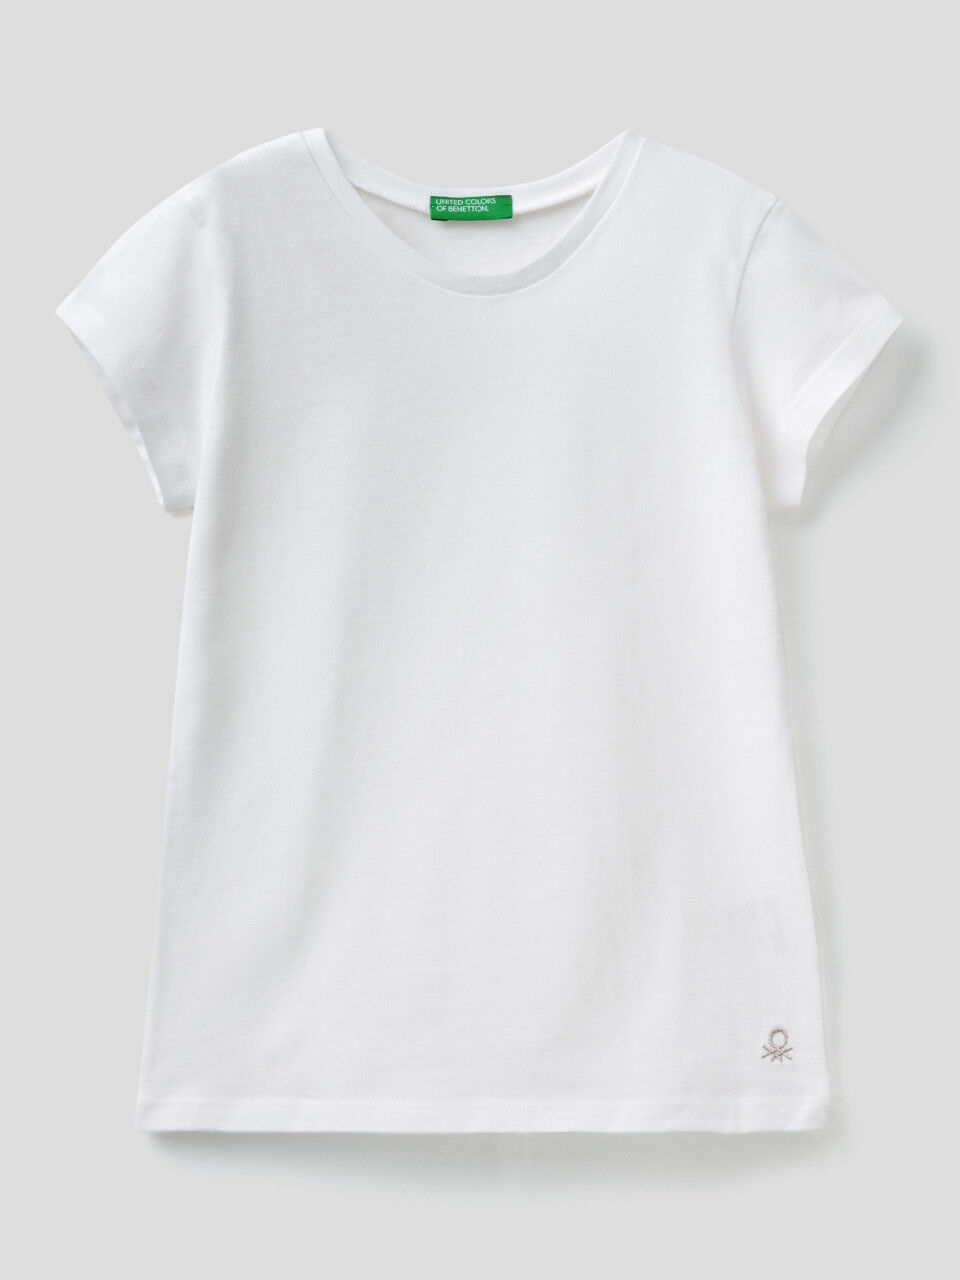 T-shirt in pure organic cotton